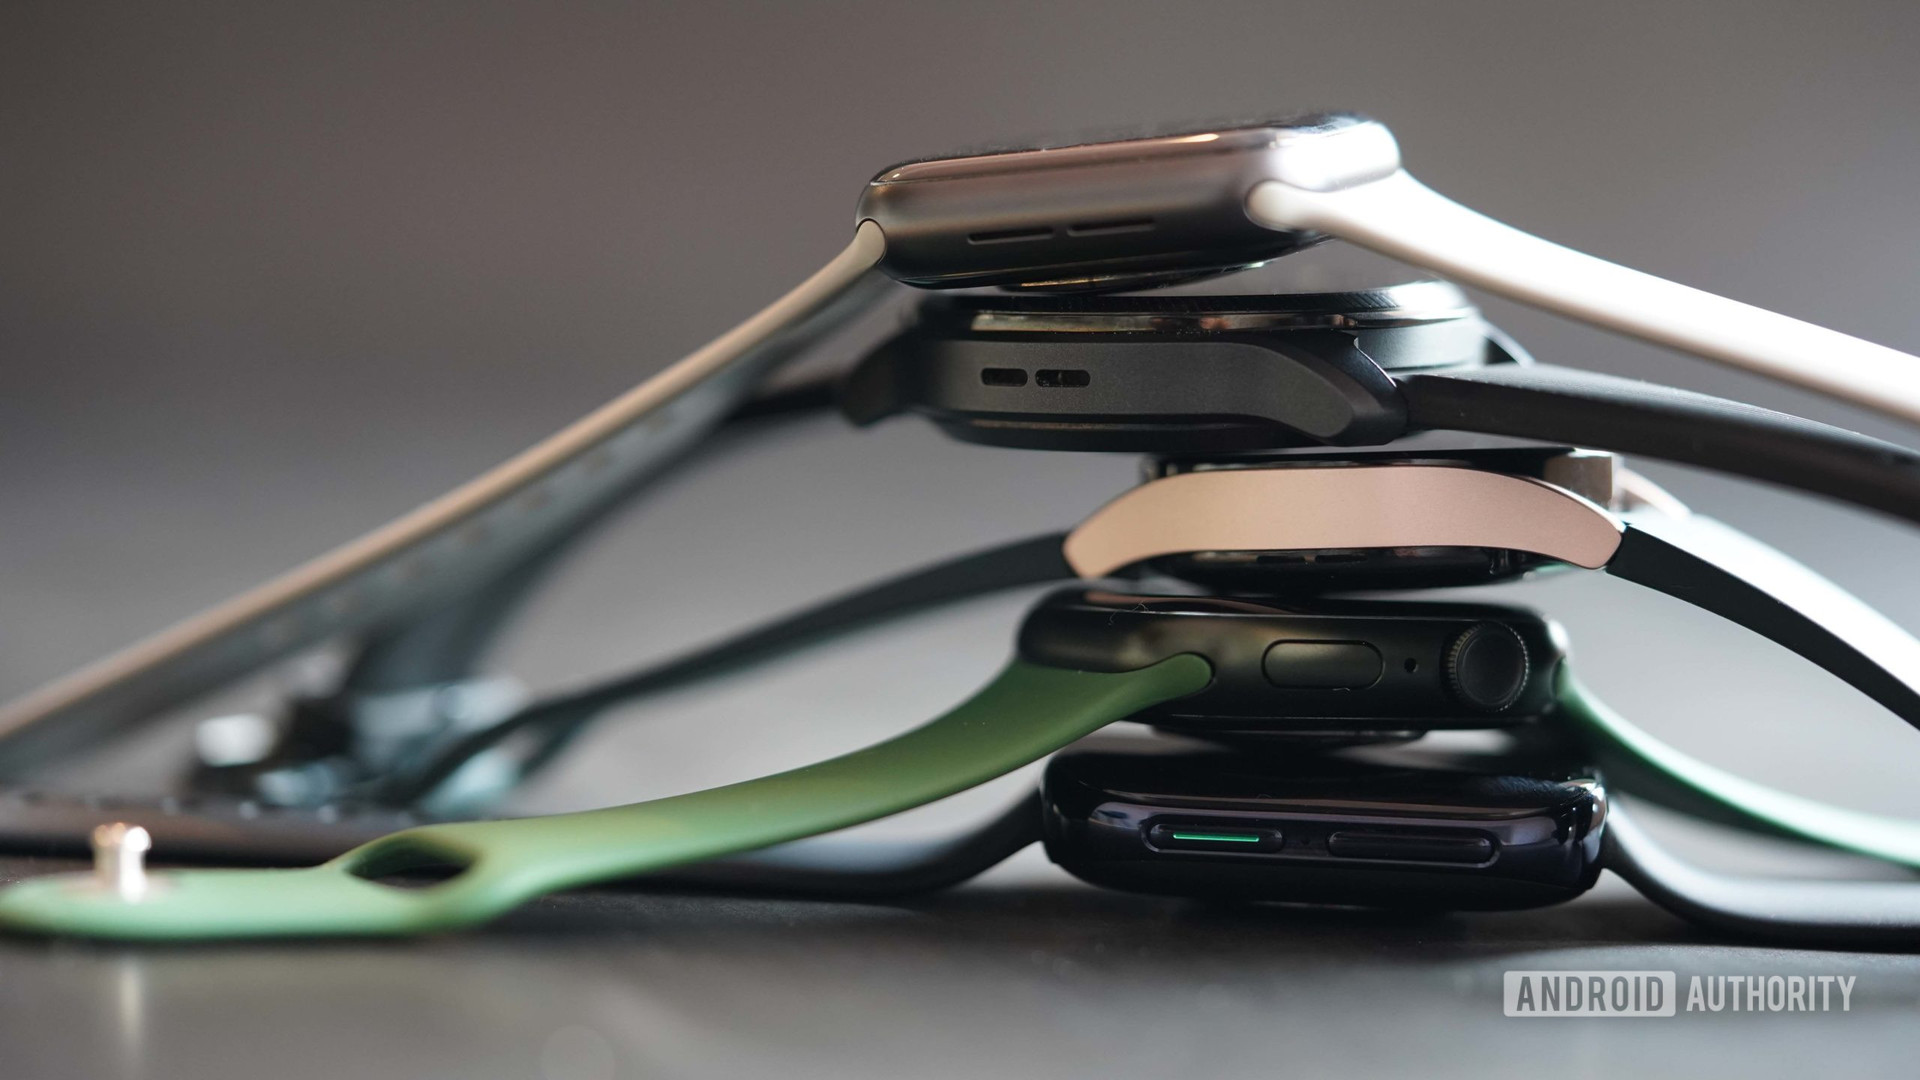 Setumpuk jam tangan pintar termasuk Apple Watch Series 6 dan 7, serta Galaxy Watch 4, Oppo Watch, dan TicWatch Pro 3 Ultra.